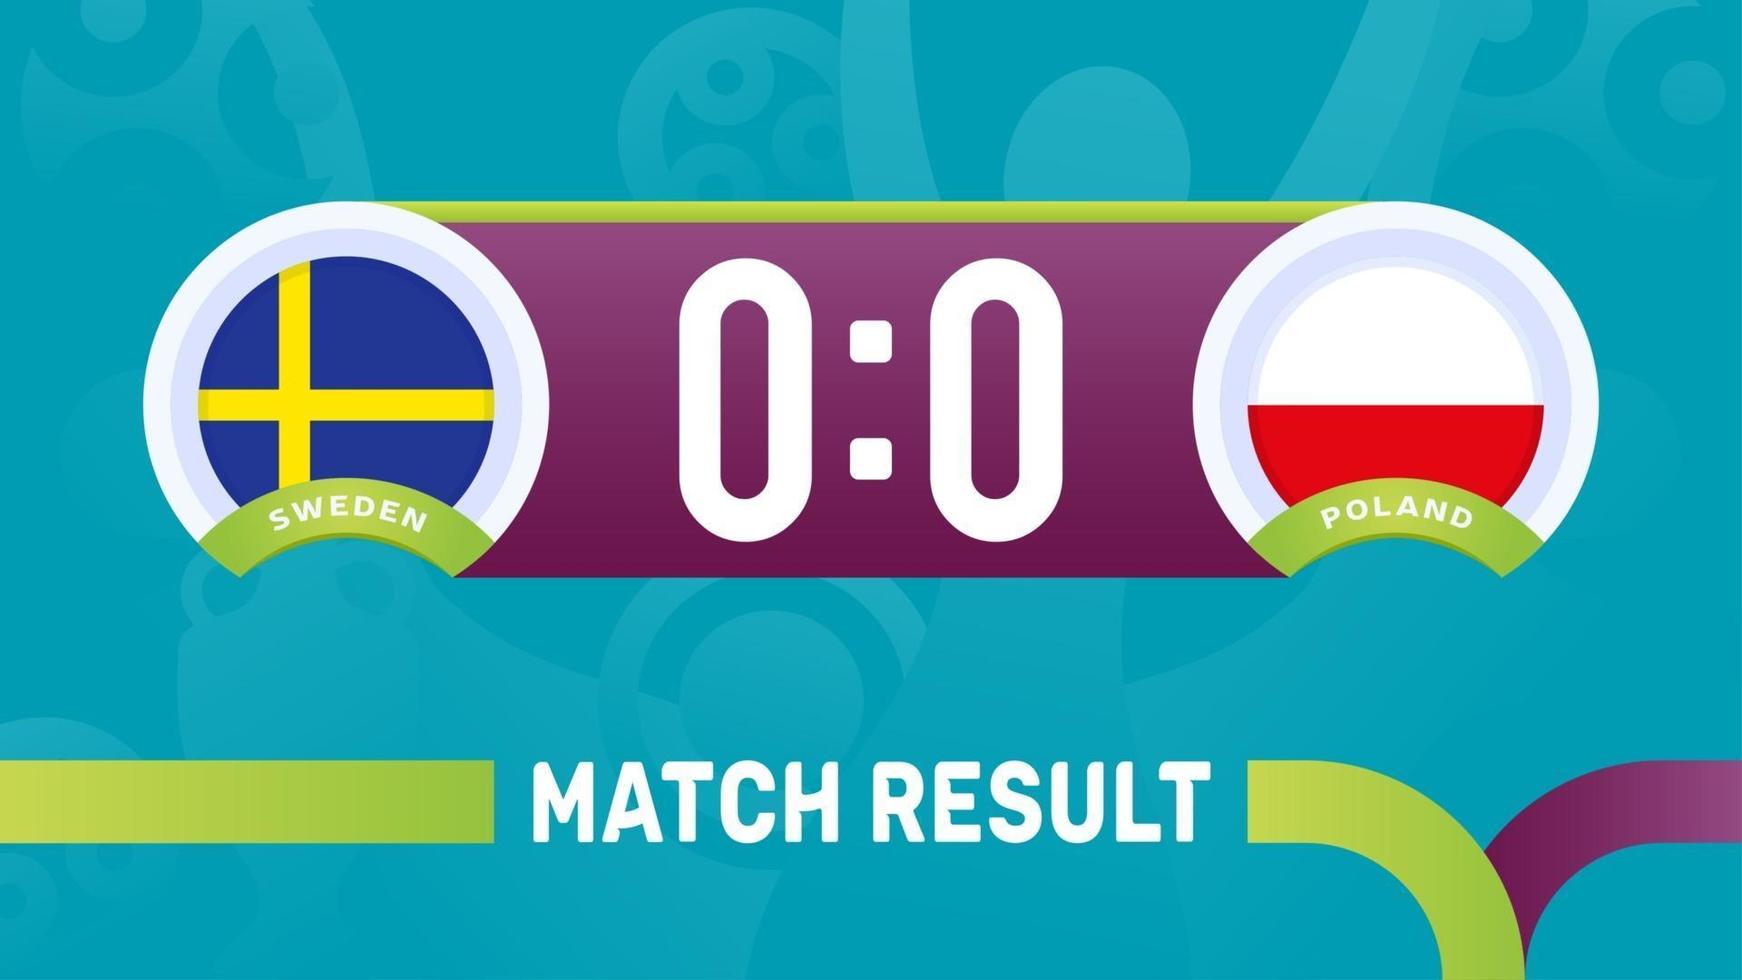 sweden poland match result, European Football Championship 2020 vector illustration. Football 2020 championship match versus teams intro sport background